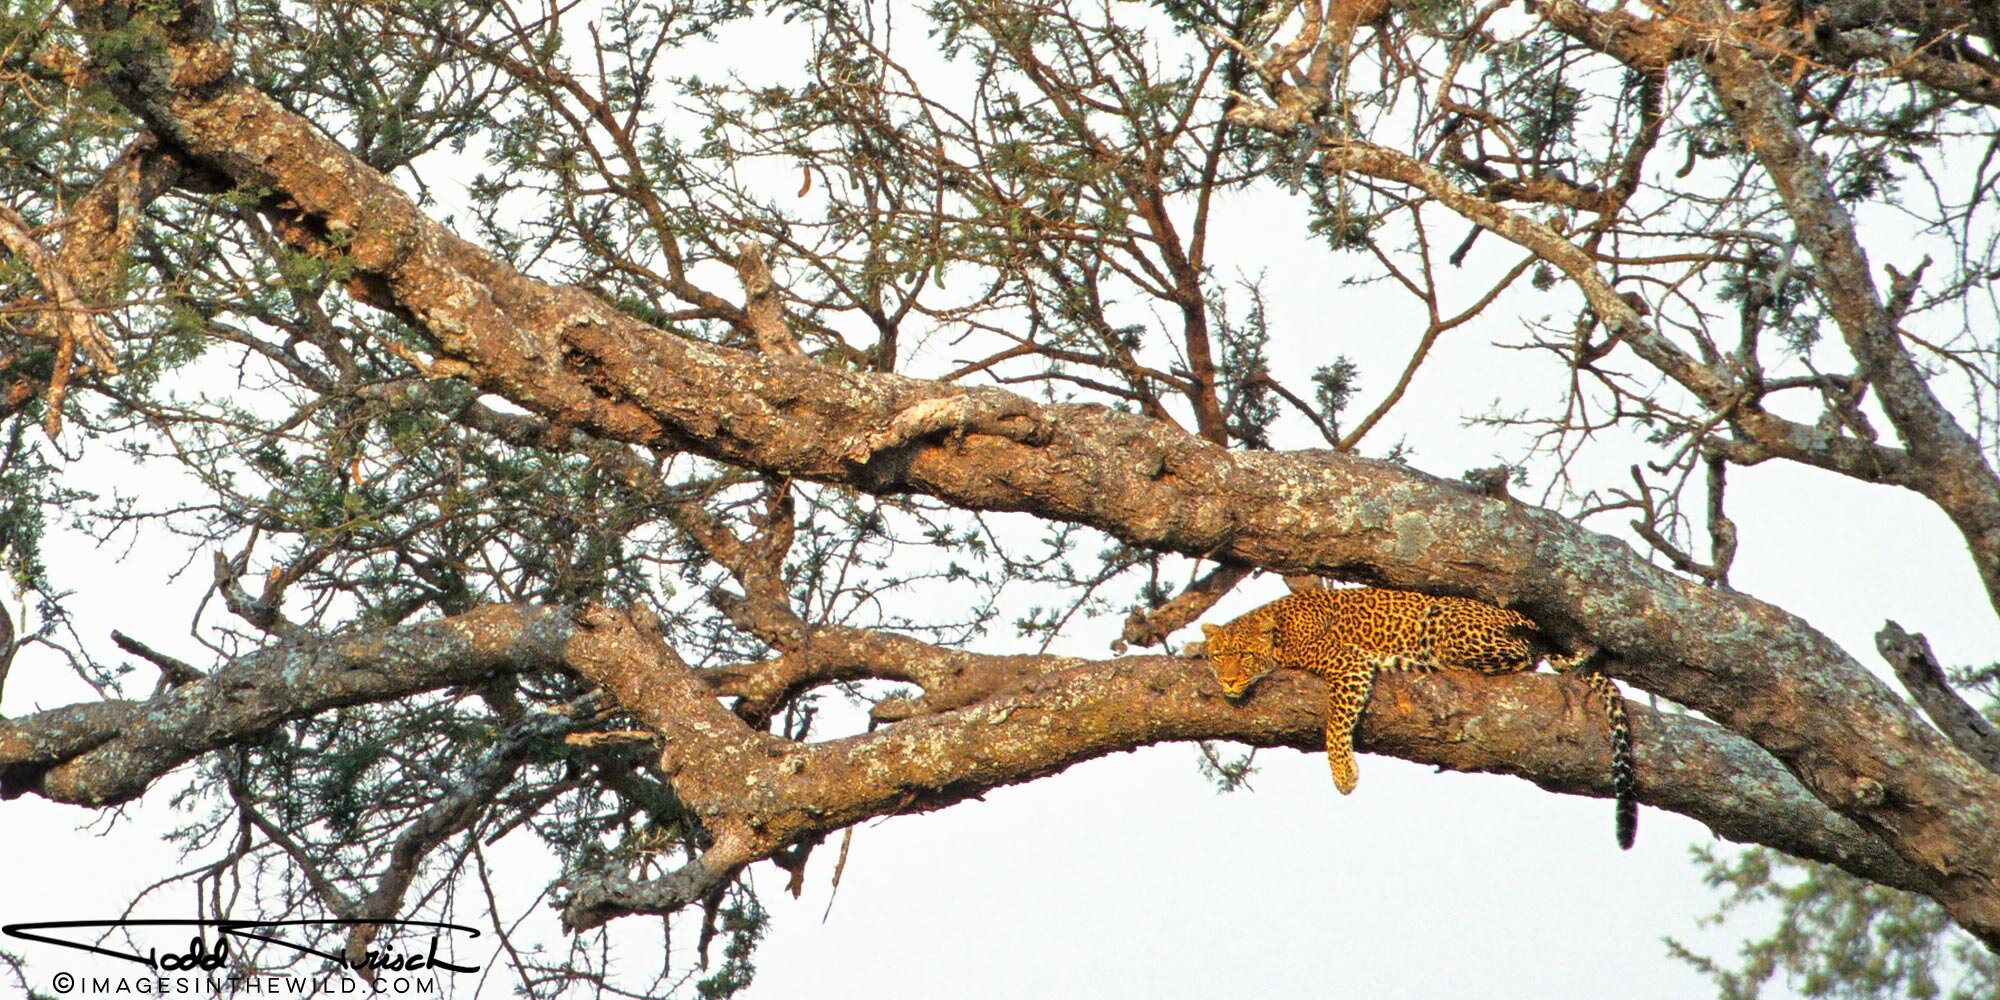  Lounging Leopard - Serengeti